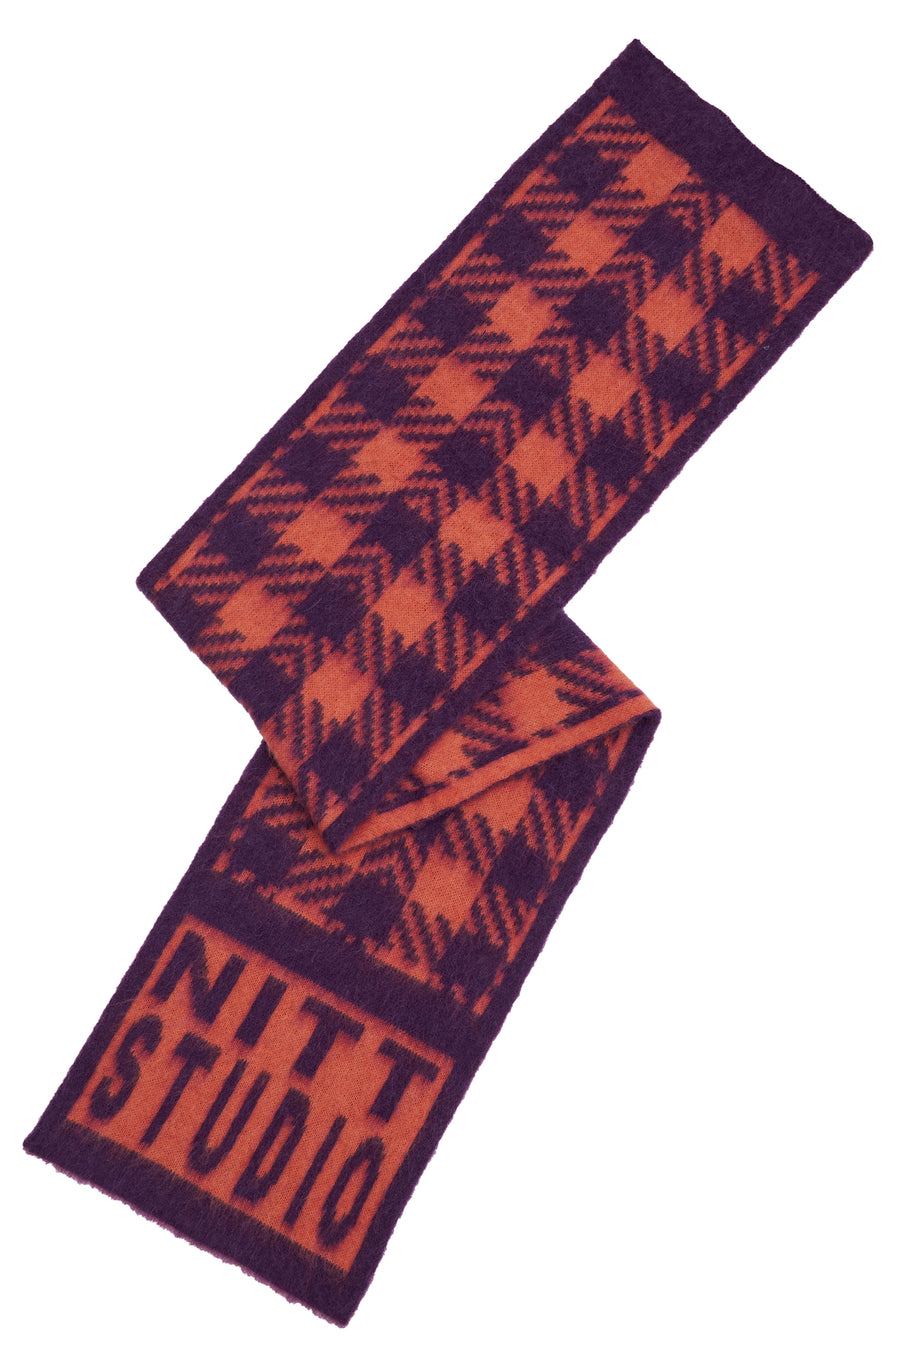 Two-tone unisex scarf